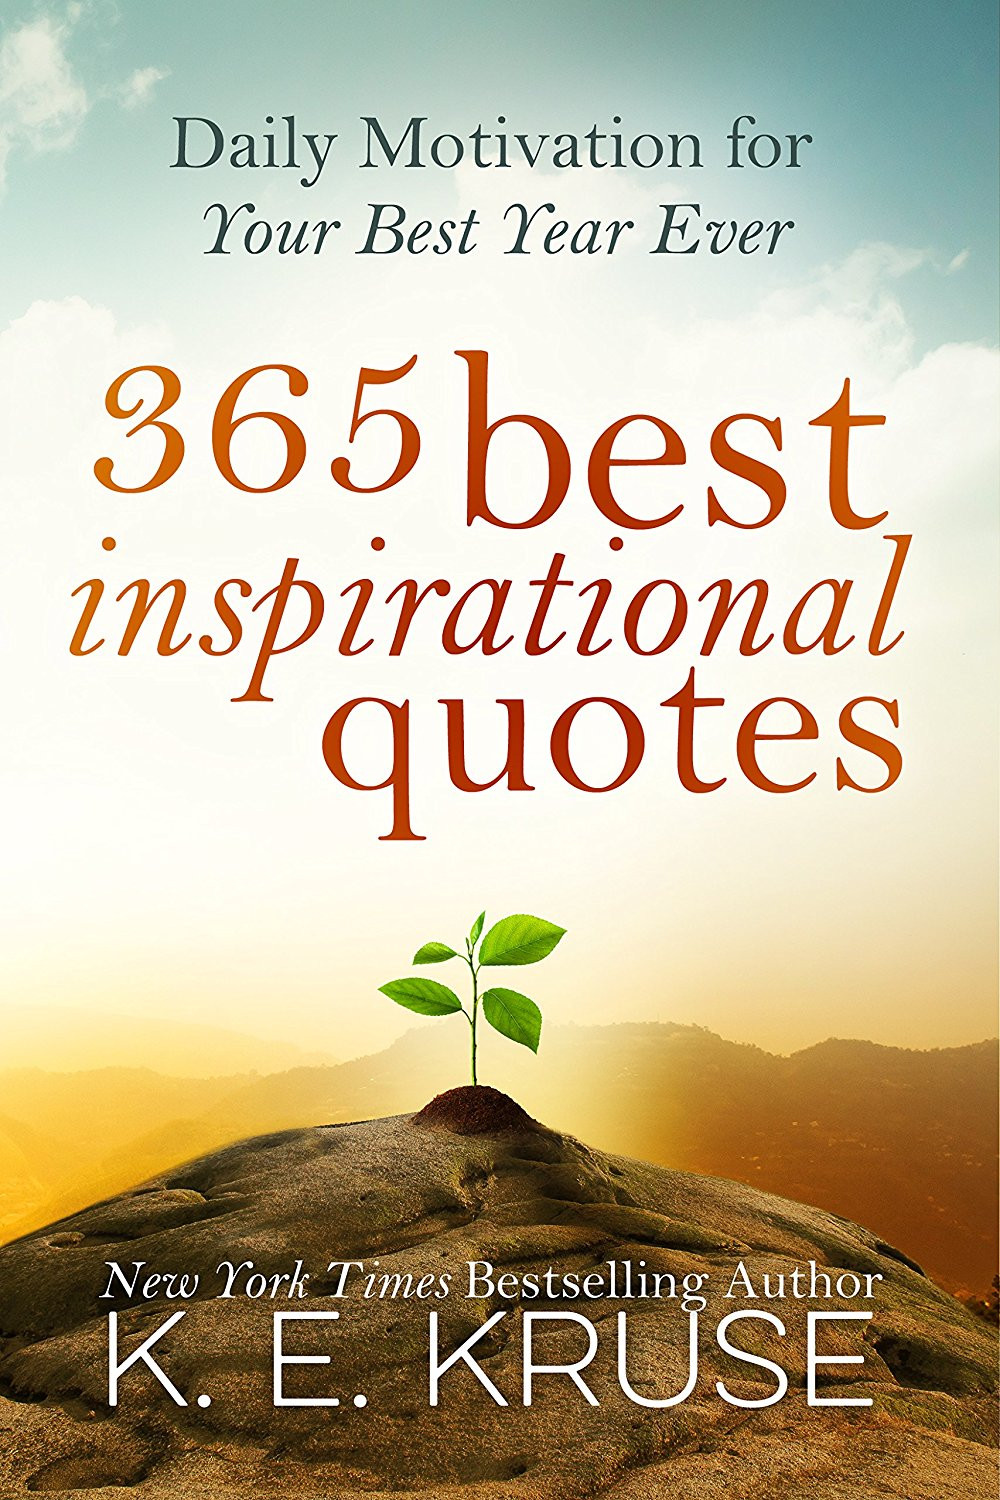 Best Positive Quotes
 AMAZON KINDLE BOOK PROMOTION 365 Best Inspirational